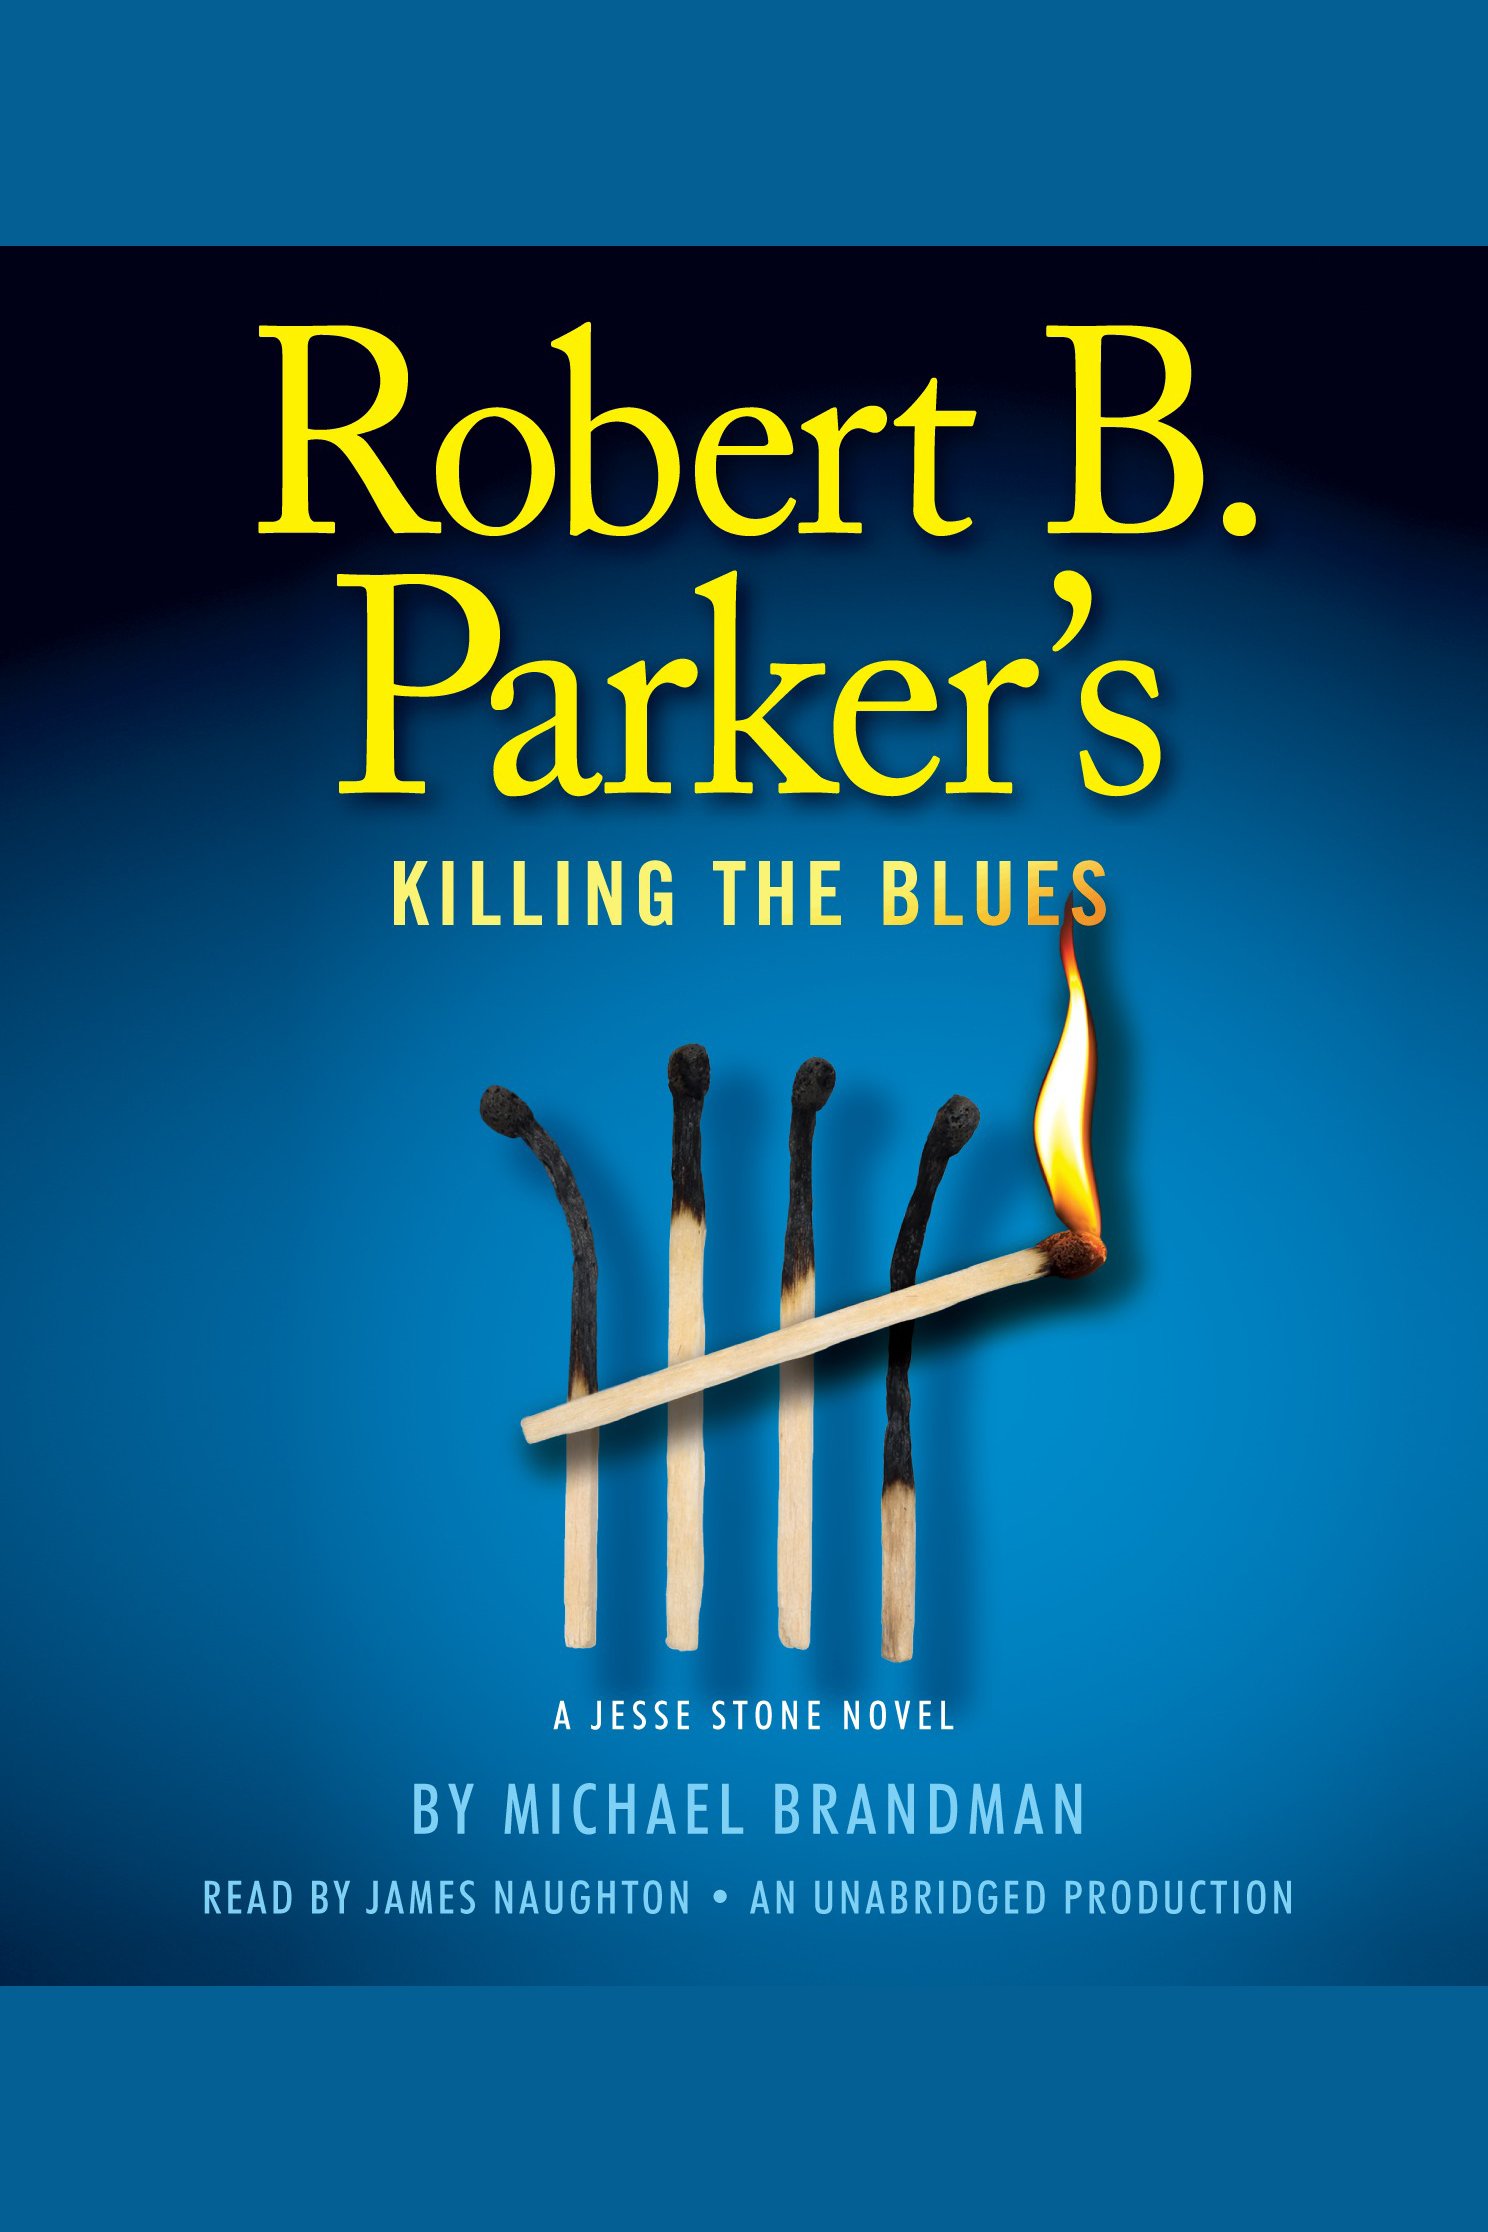 Robert B. Parker's killing the blues cover image